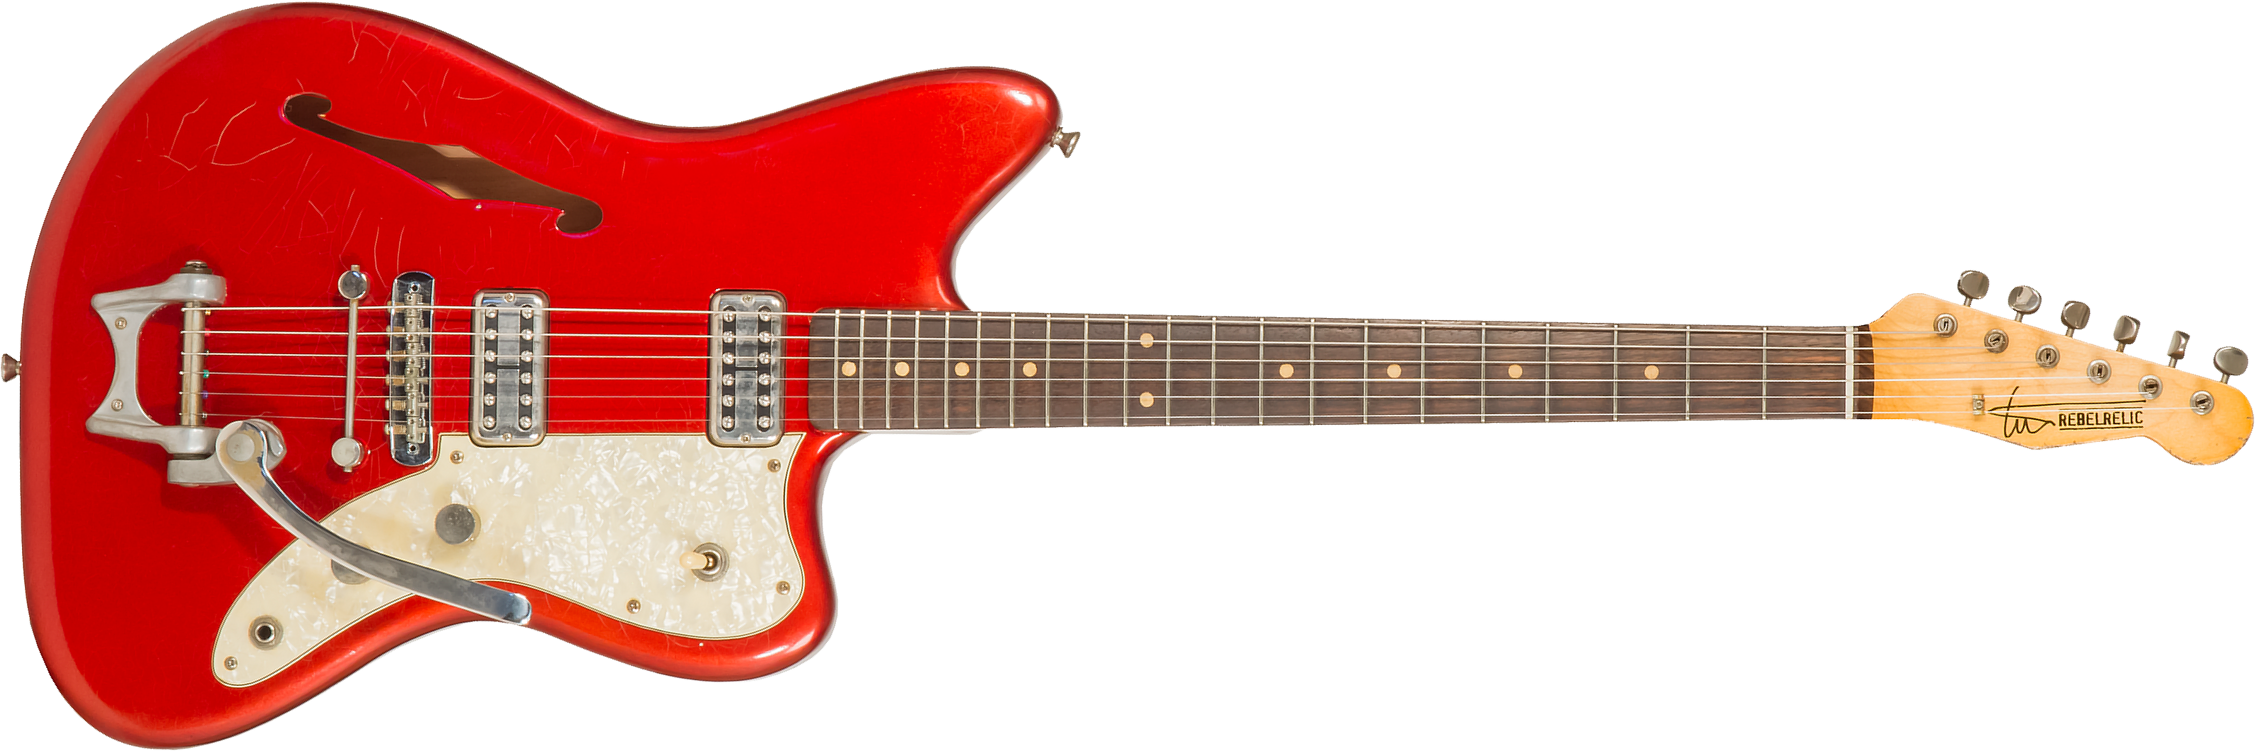 Rebelrelic Wrangler 2h Trem Rw #62175 - Light Aged Candy Apple Red - Semi hollow elektriche gitaar - Main picture